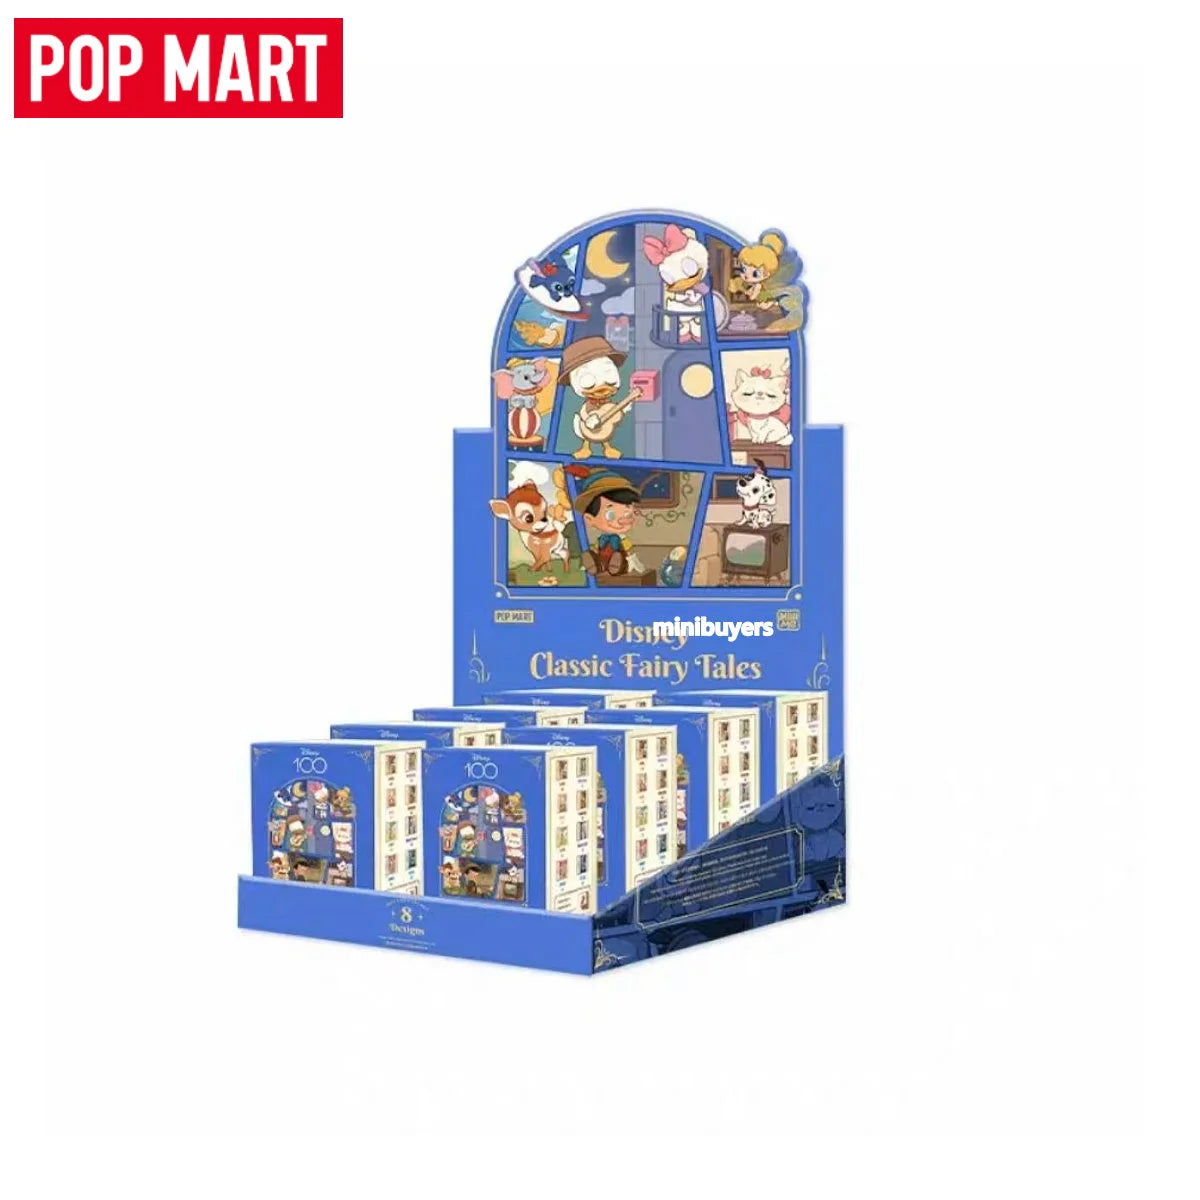 POP MART Disney Princess Fairy Tale Friendship Series Figure Confirmed  Blind Box